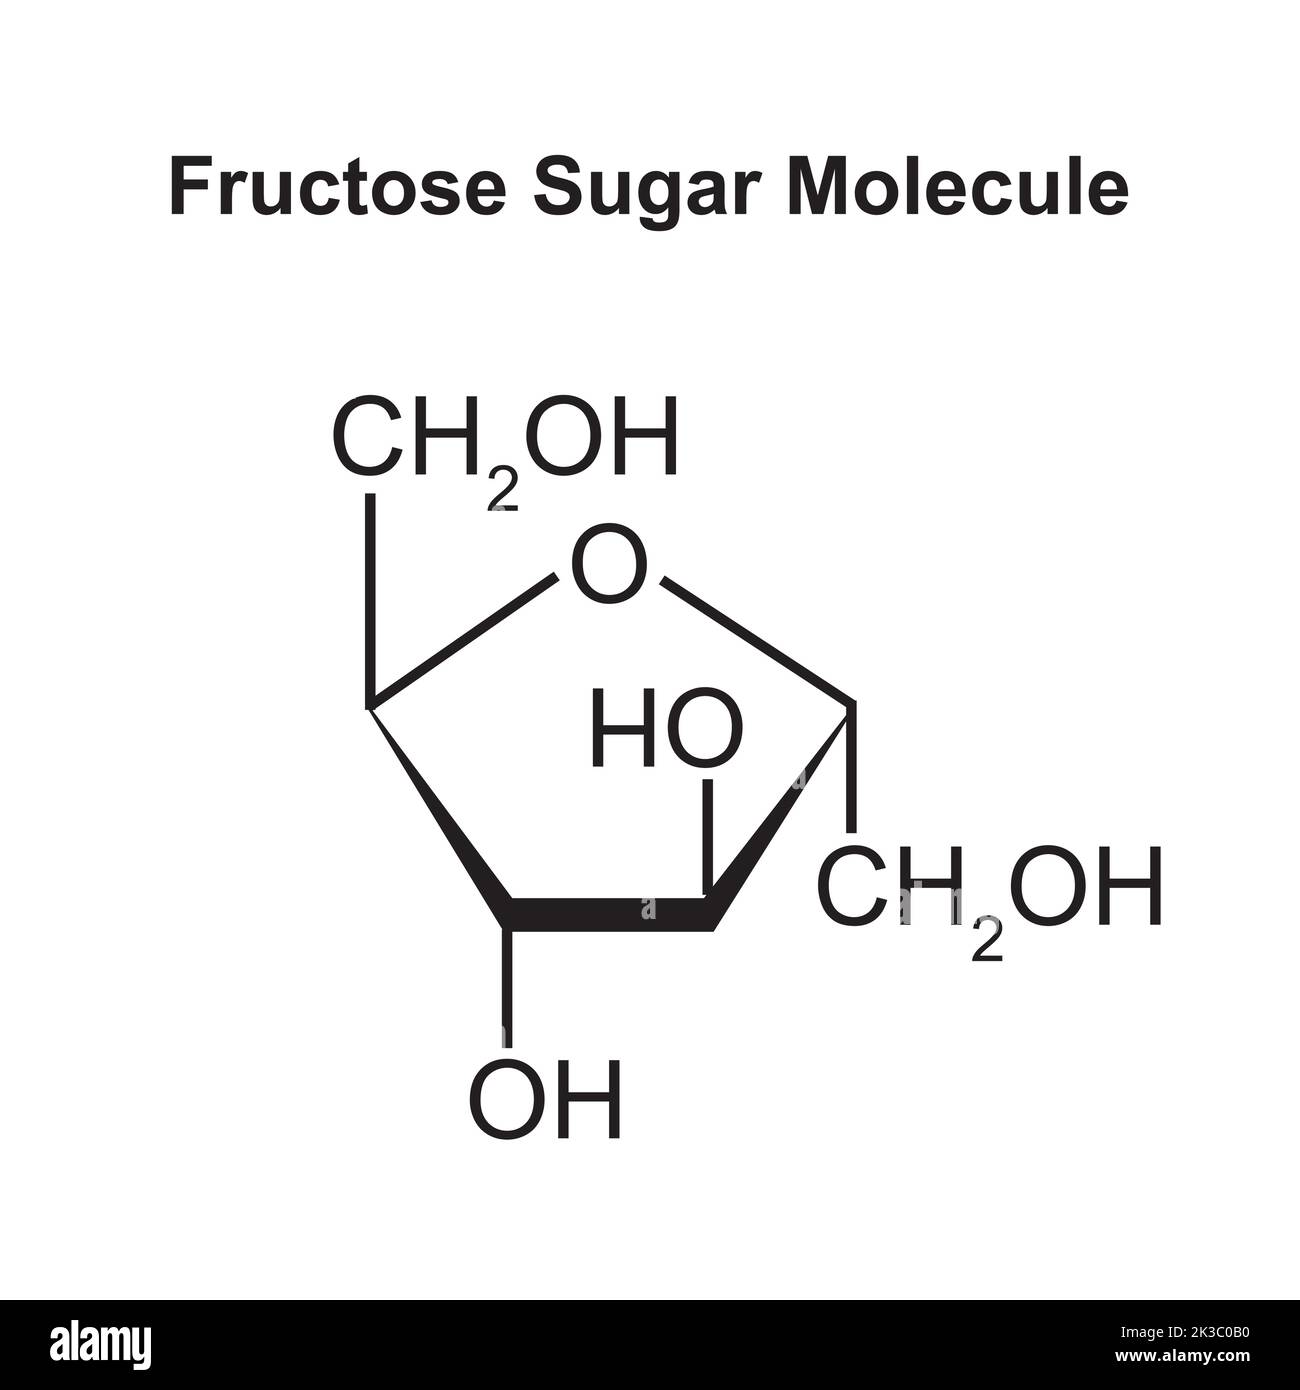 Chemical Illustration of Fructose Sugar Molecule. Vector Illustration. Stock Vector